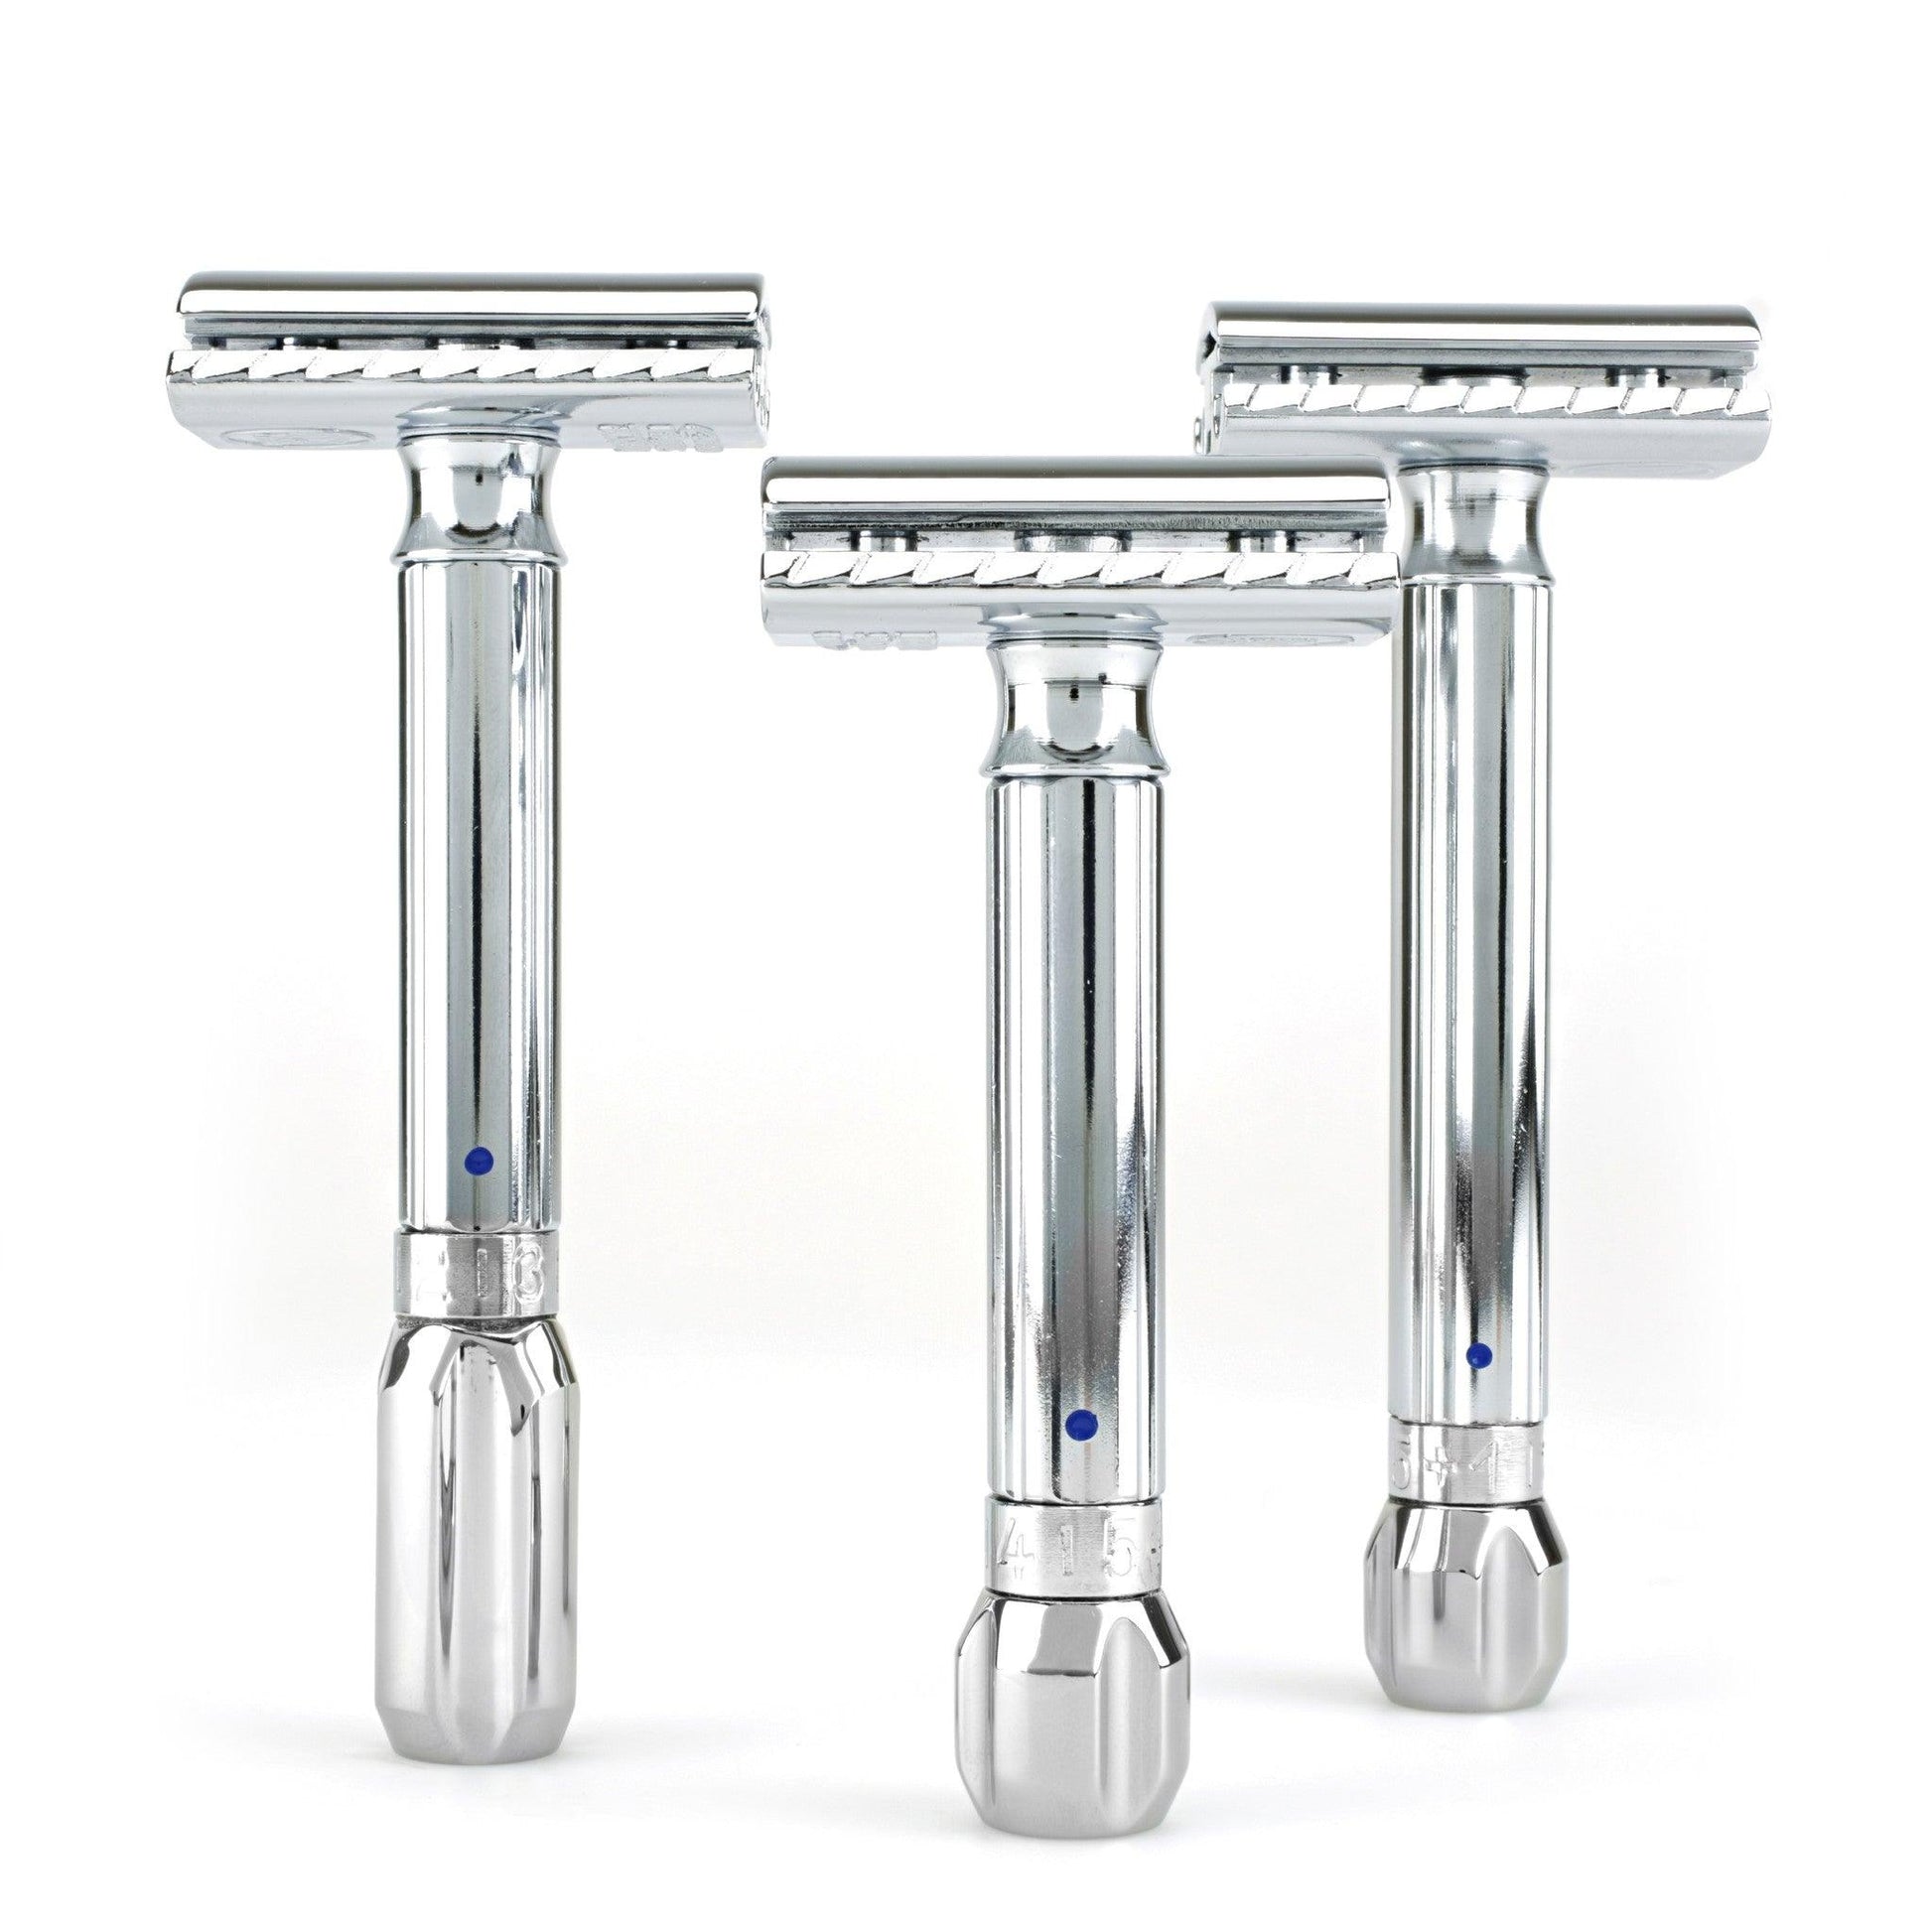 Shaving razors (4 photos) - Photography and Web Design - Los Angeles, US based Shopify Experts Revo Designs